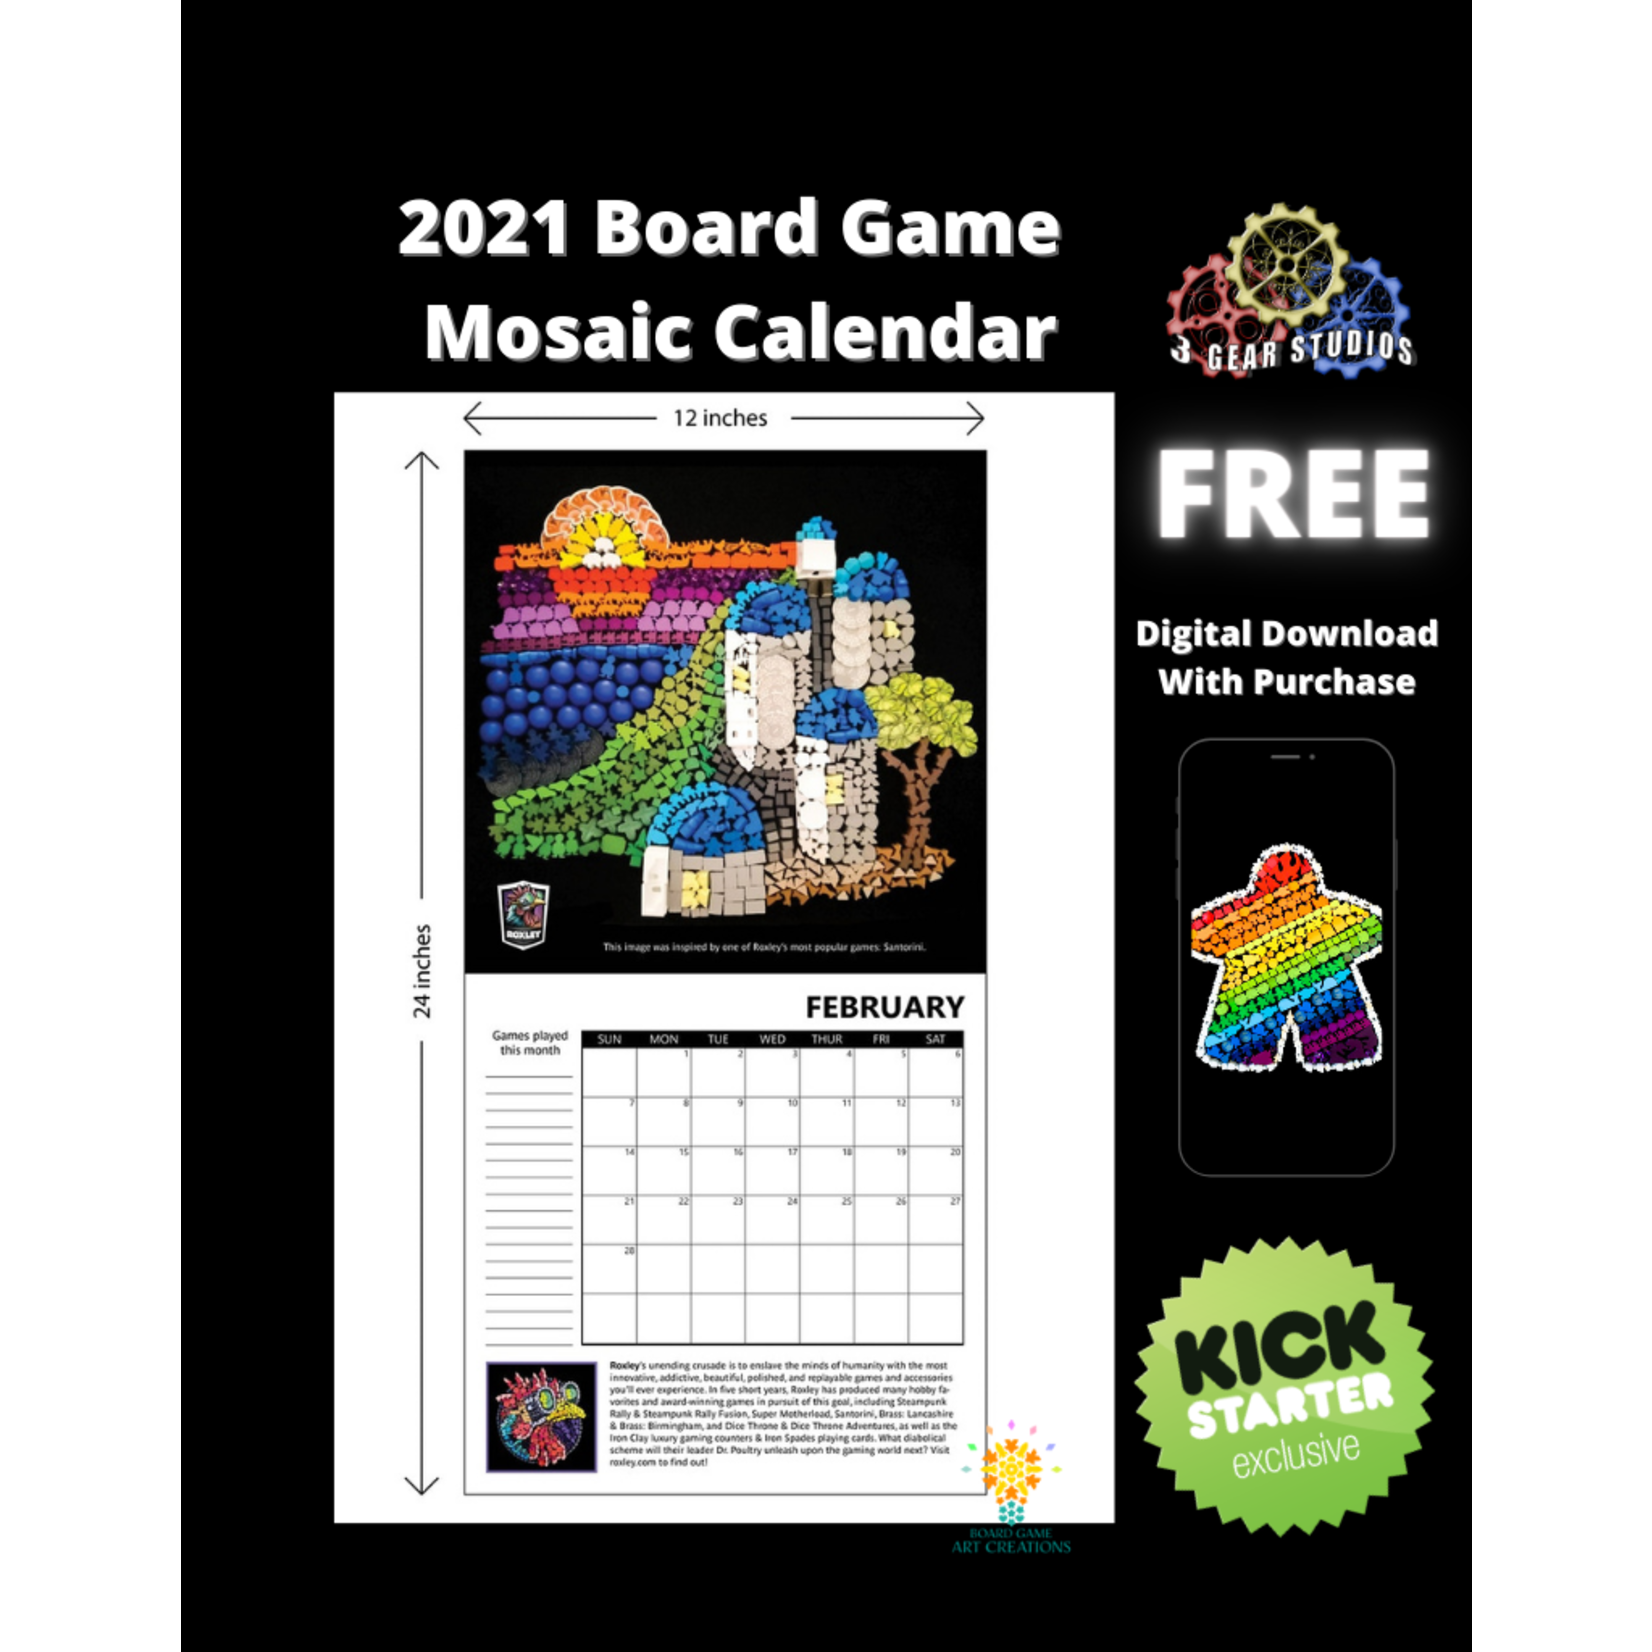 2021 Board Game Mosaic Calendar